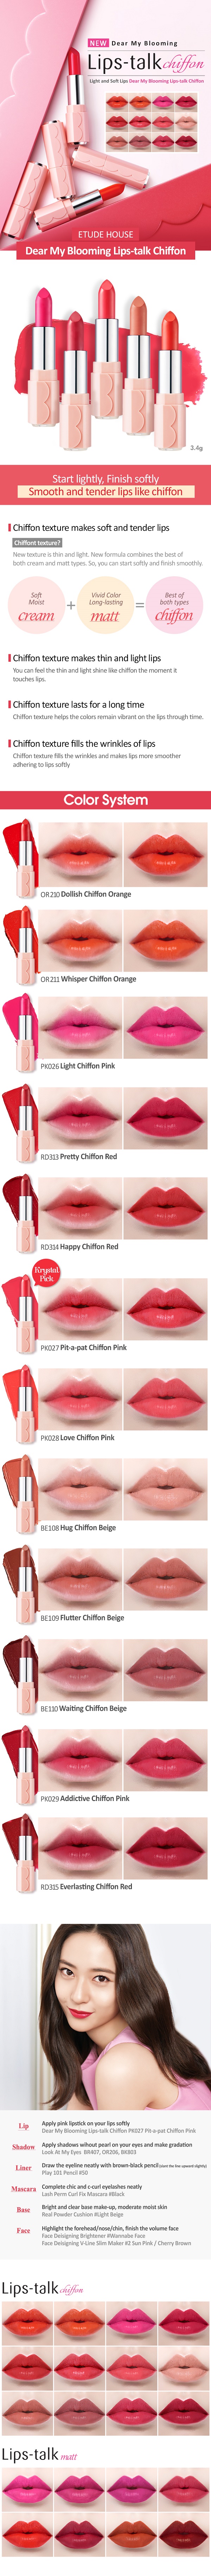 [Etude house]Dear Blooming Lips-Talk Chiffon #RD314 Happy Chiffon Red 3.4g